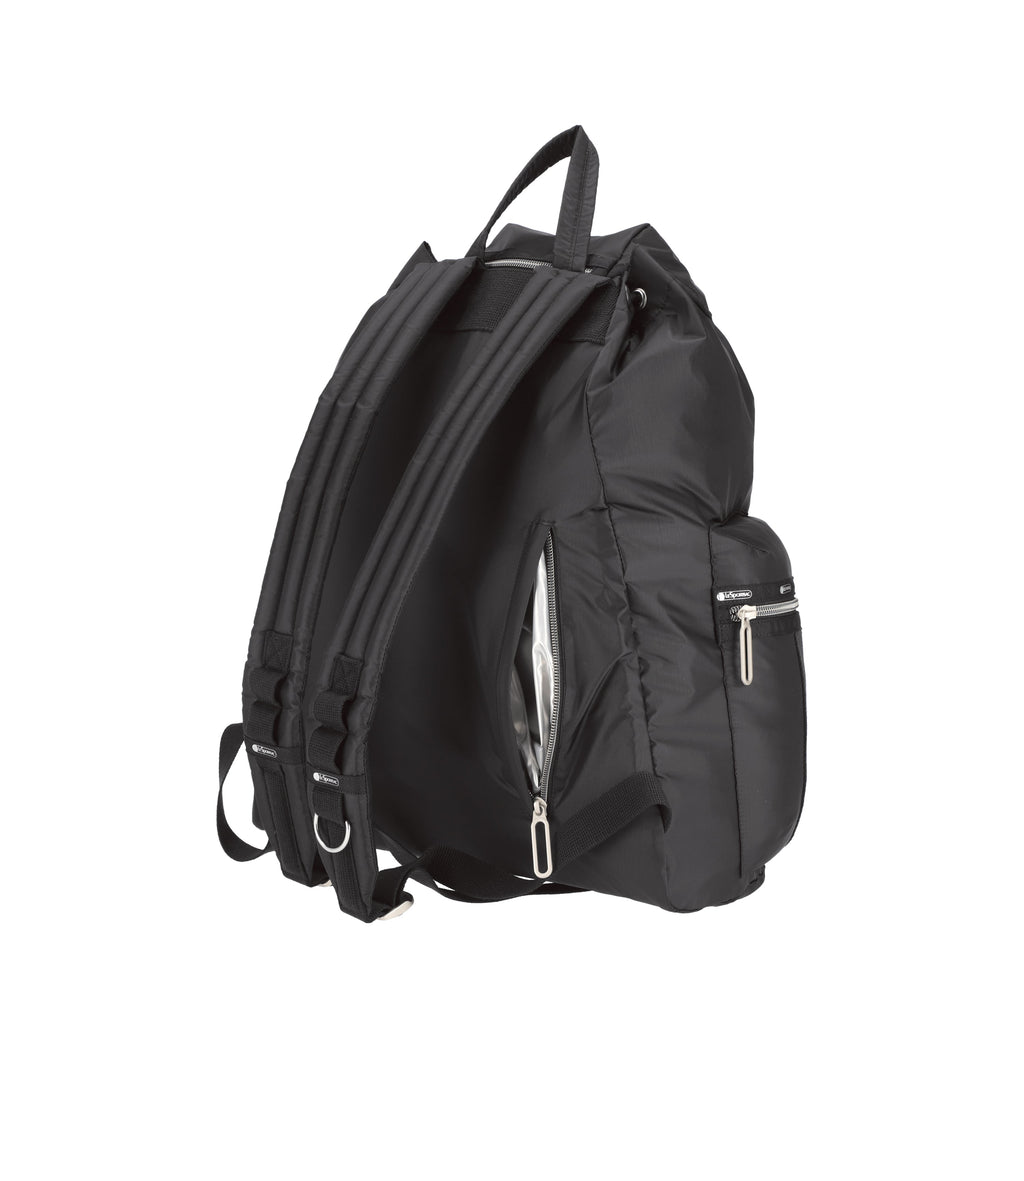 Essential Large Voyager Backpack - 25311531499568